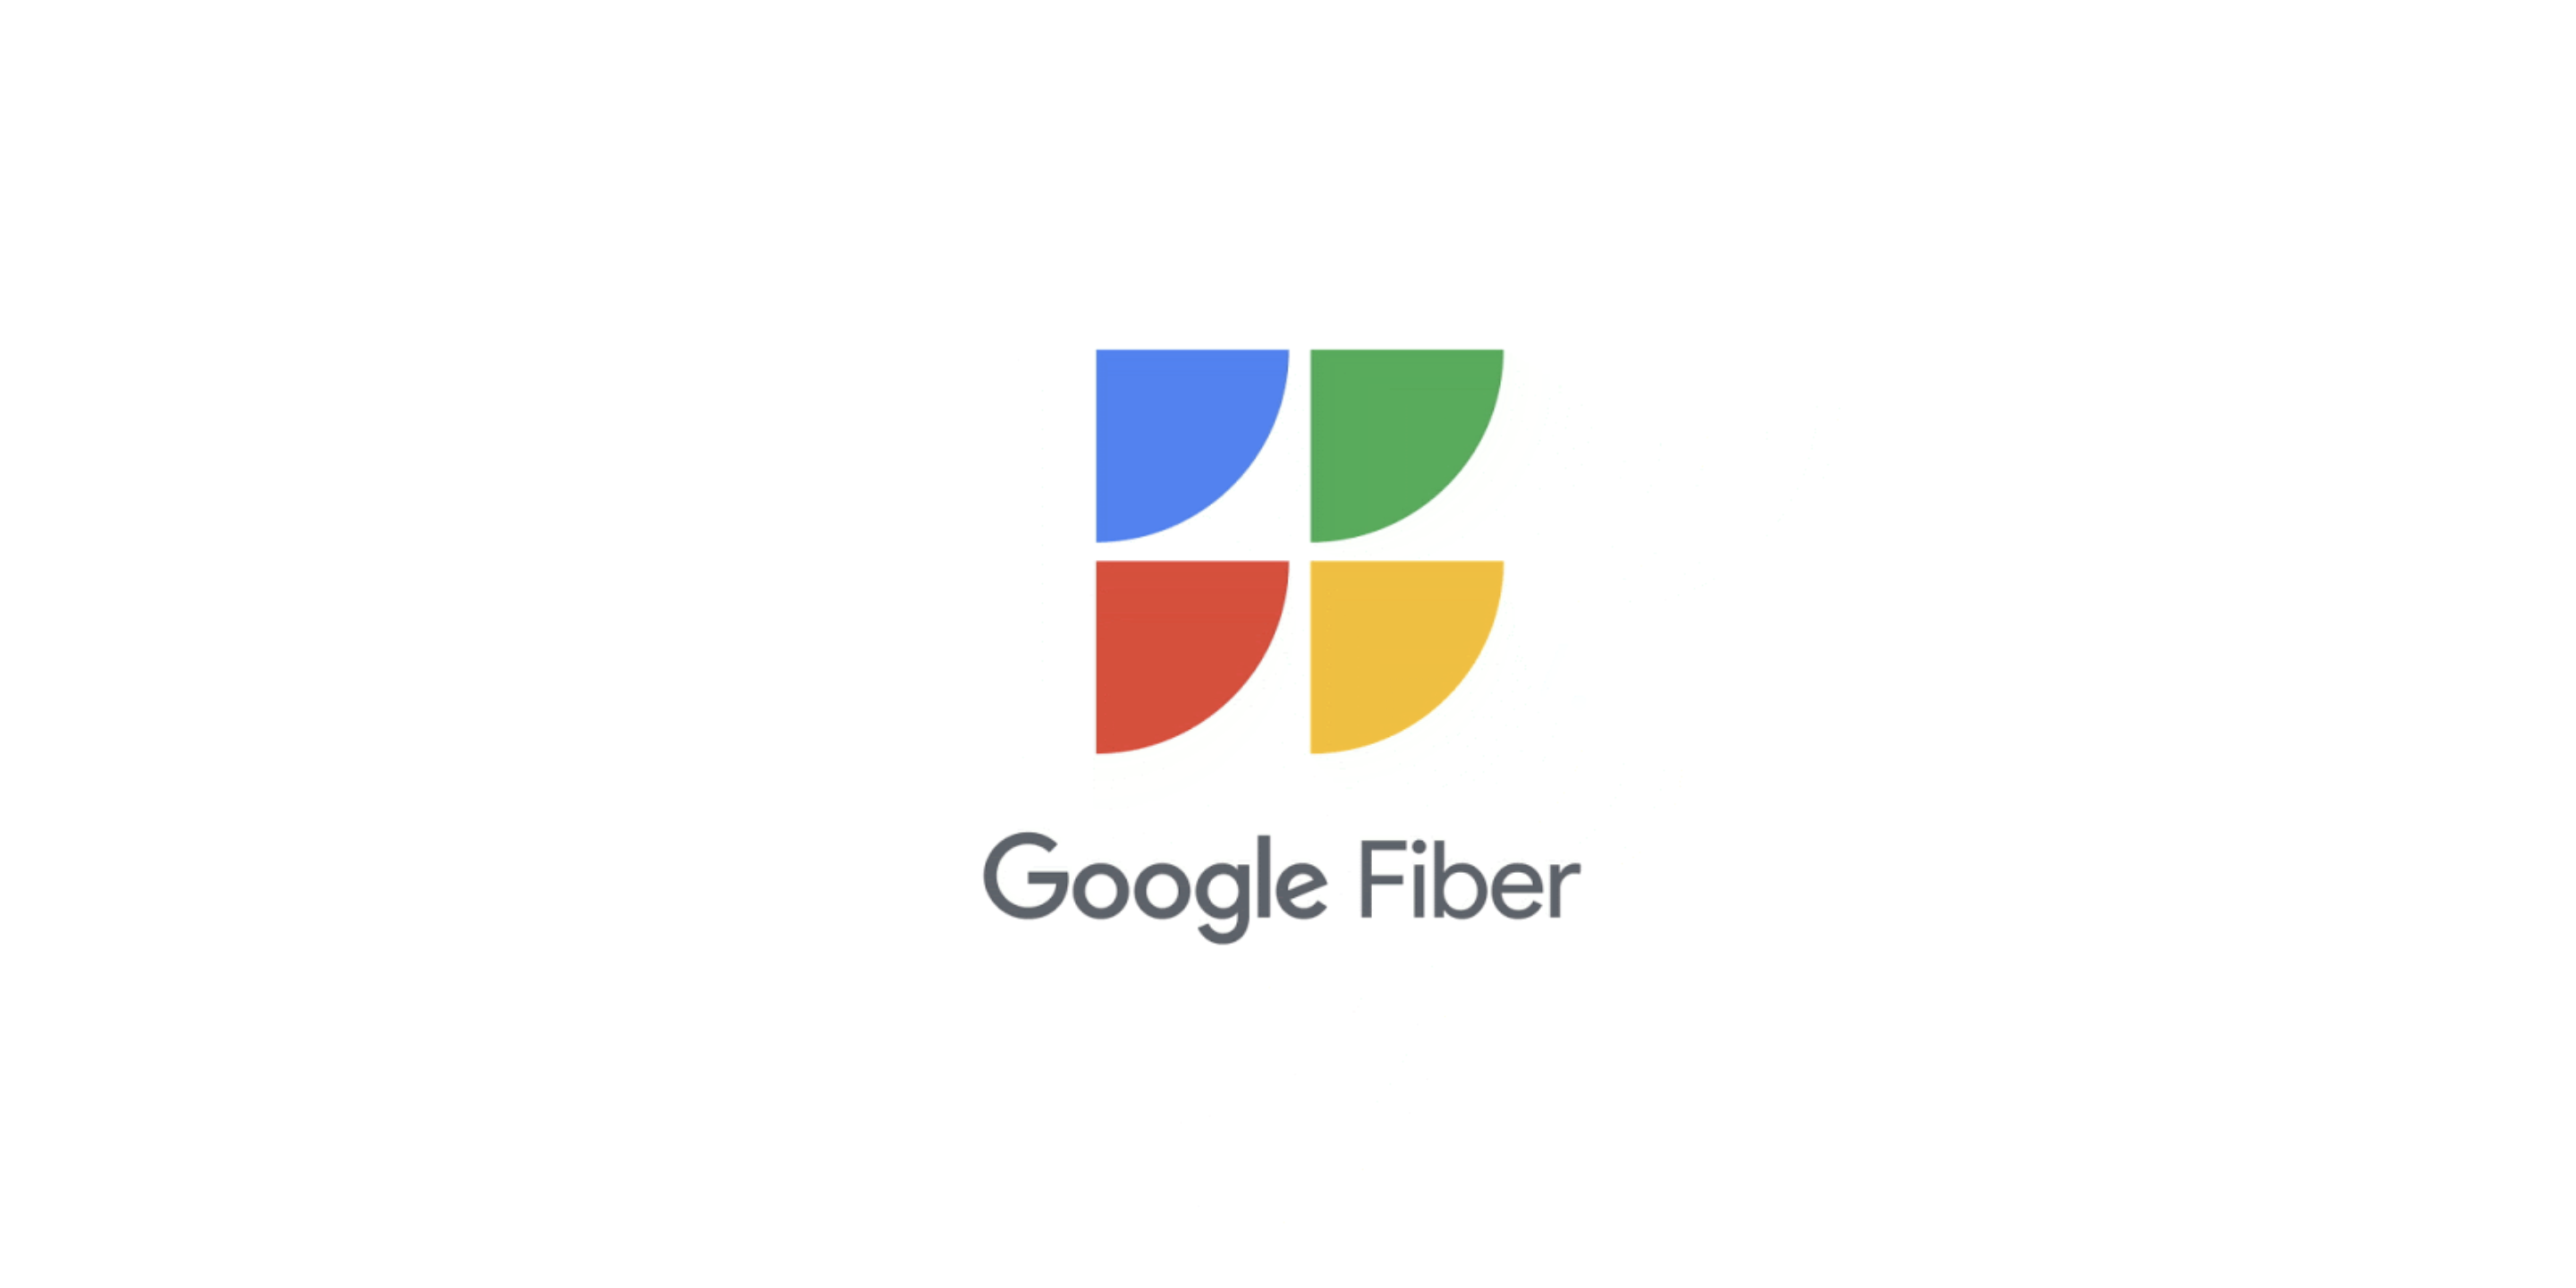 Google Fiber finally has a logo over a decade after launch - 9to5Google